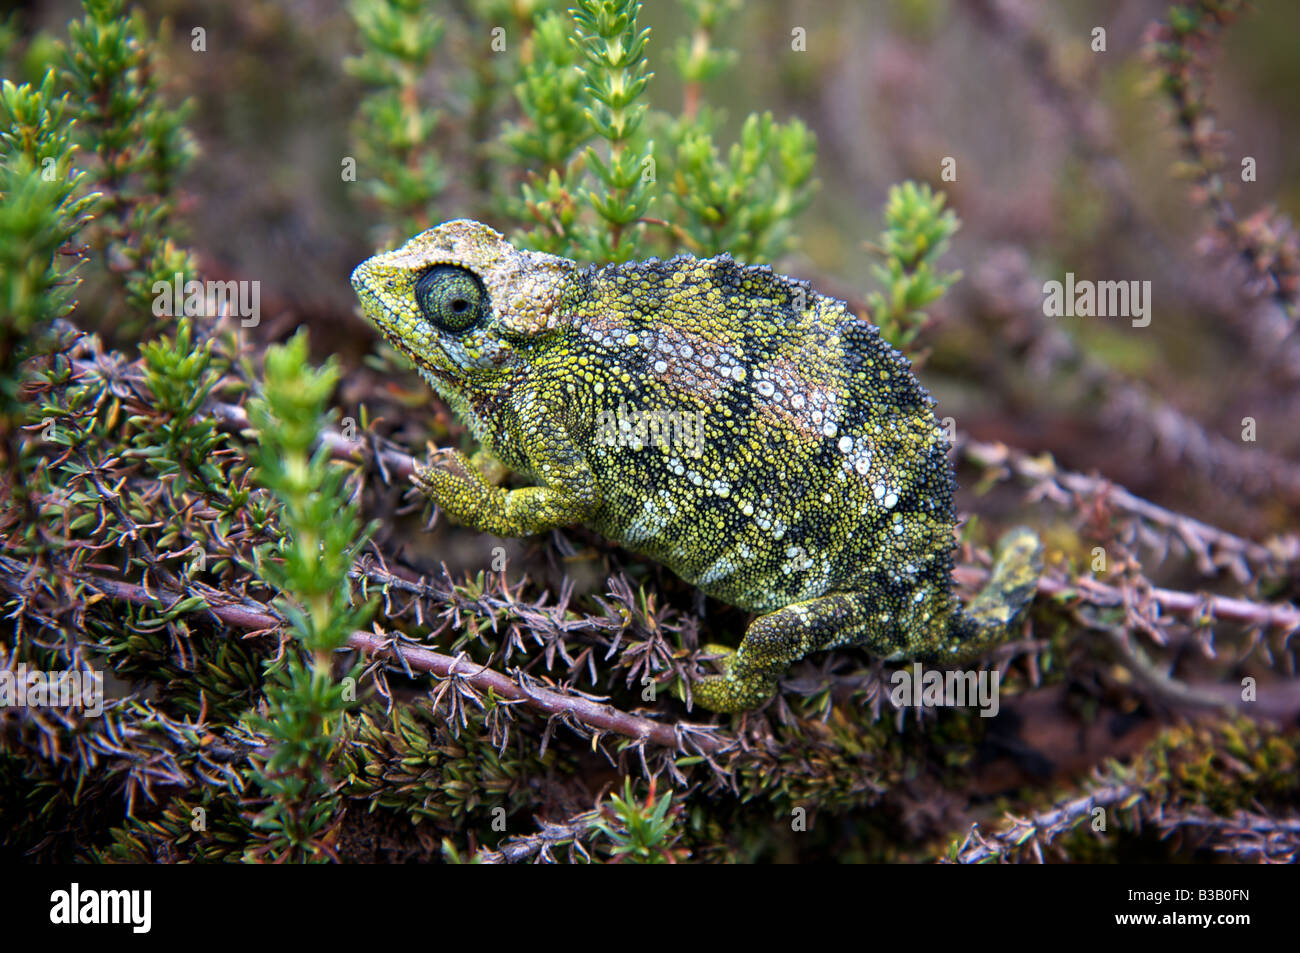 Chameleon hiding in undergrowth Stock Photo